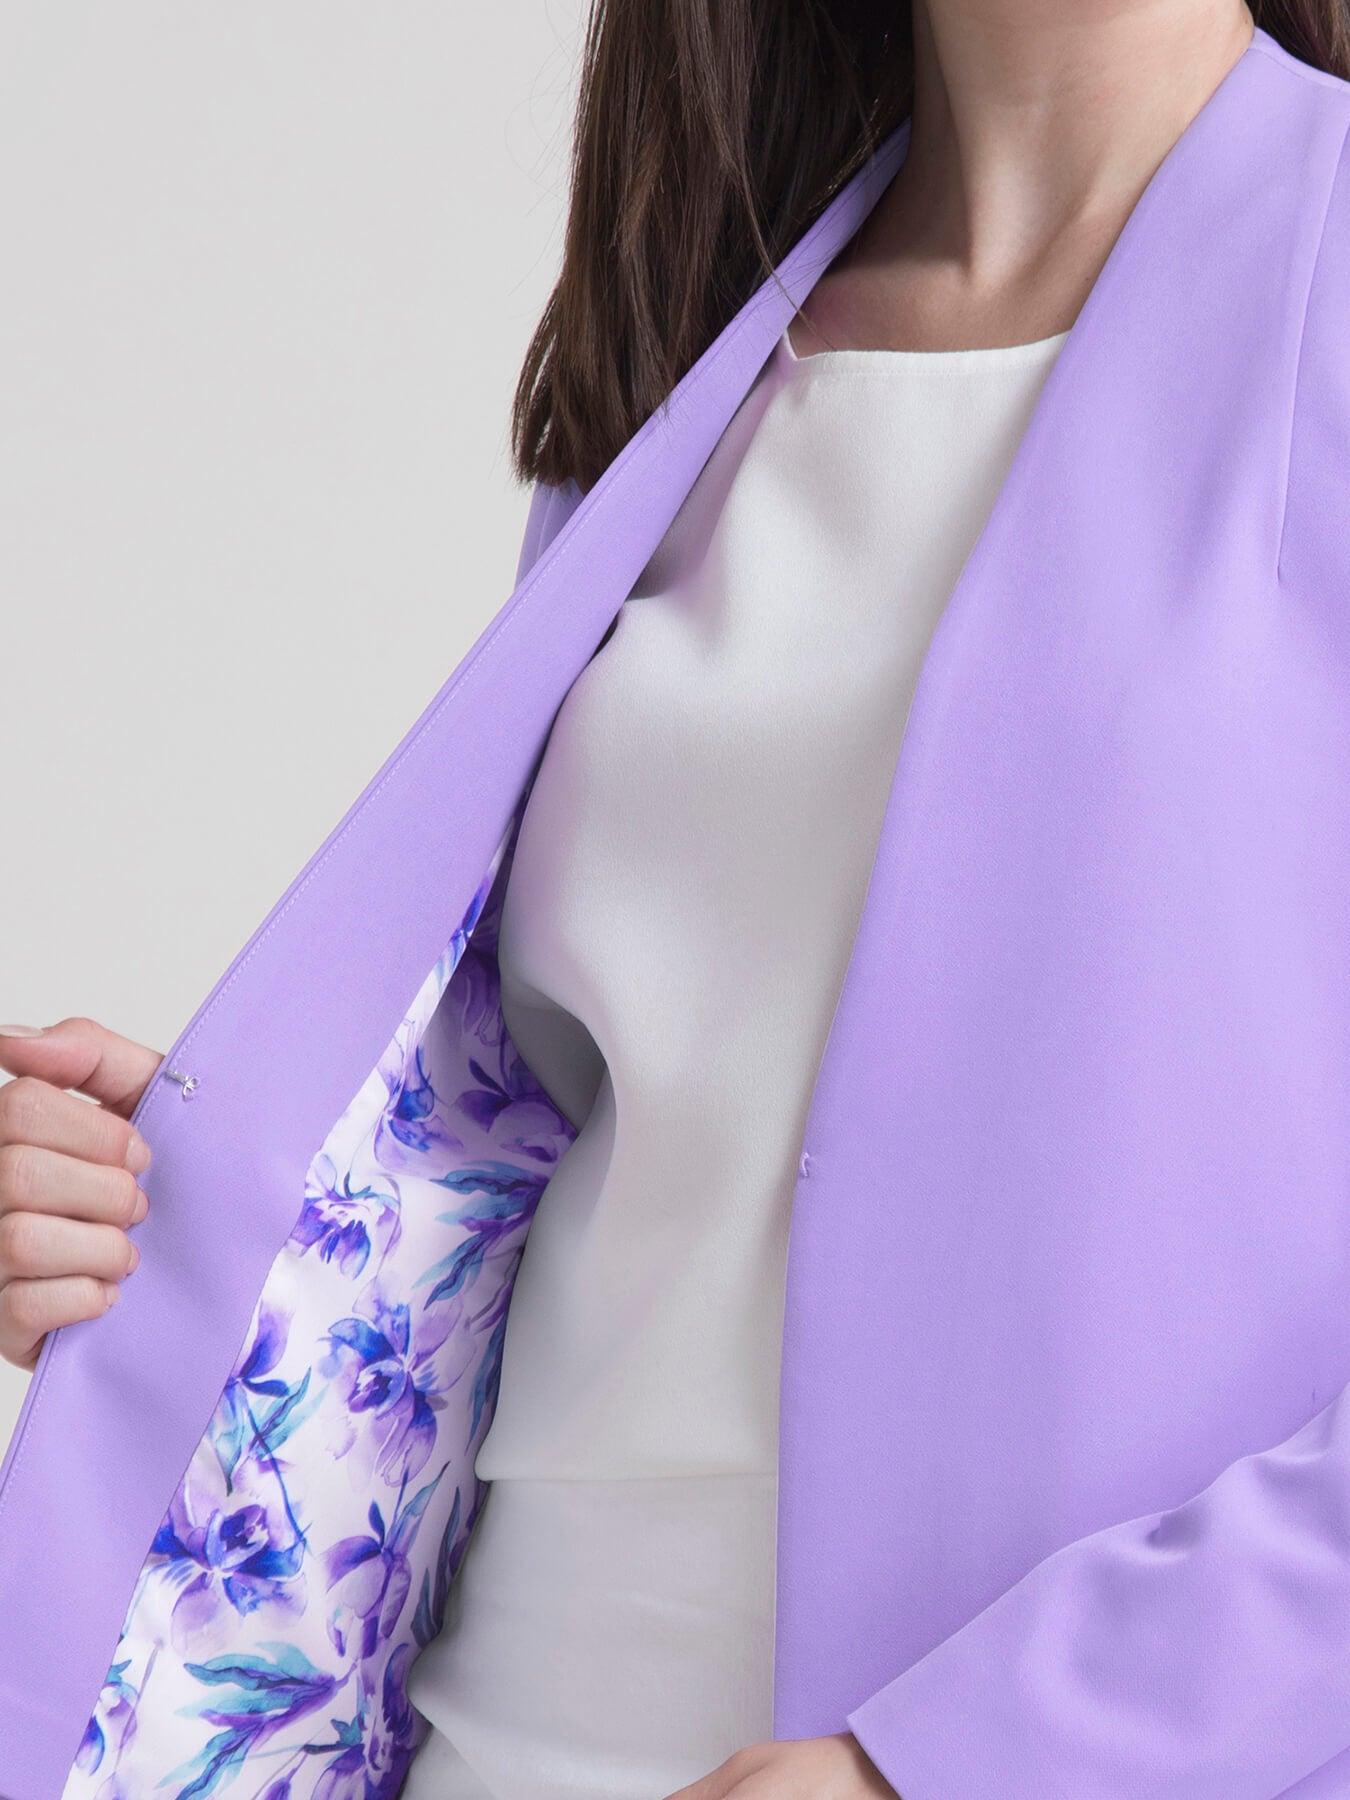 Stylish Jacket With Hook Closure - Lilac| Formal Jackets